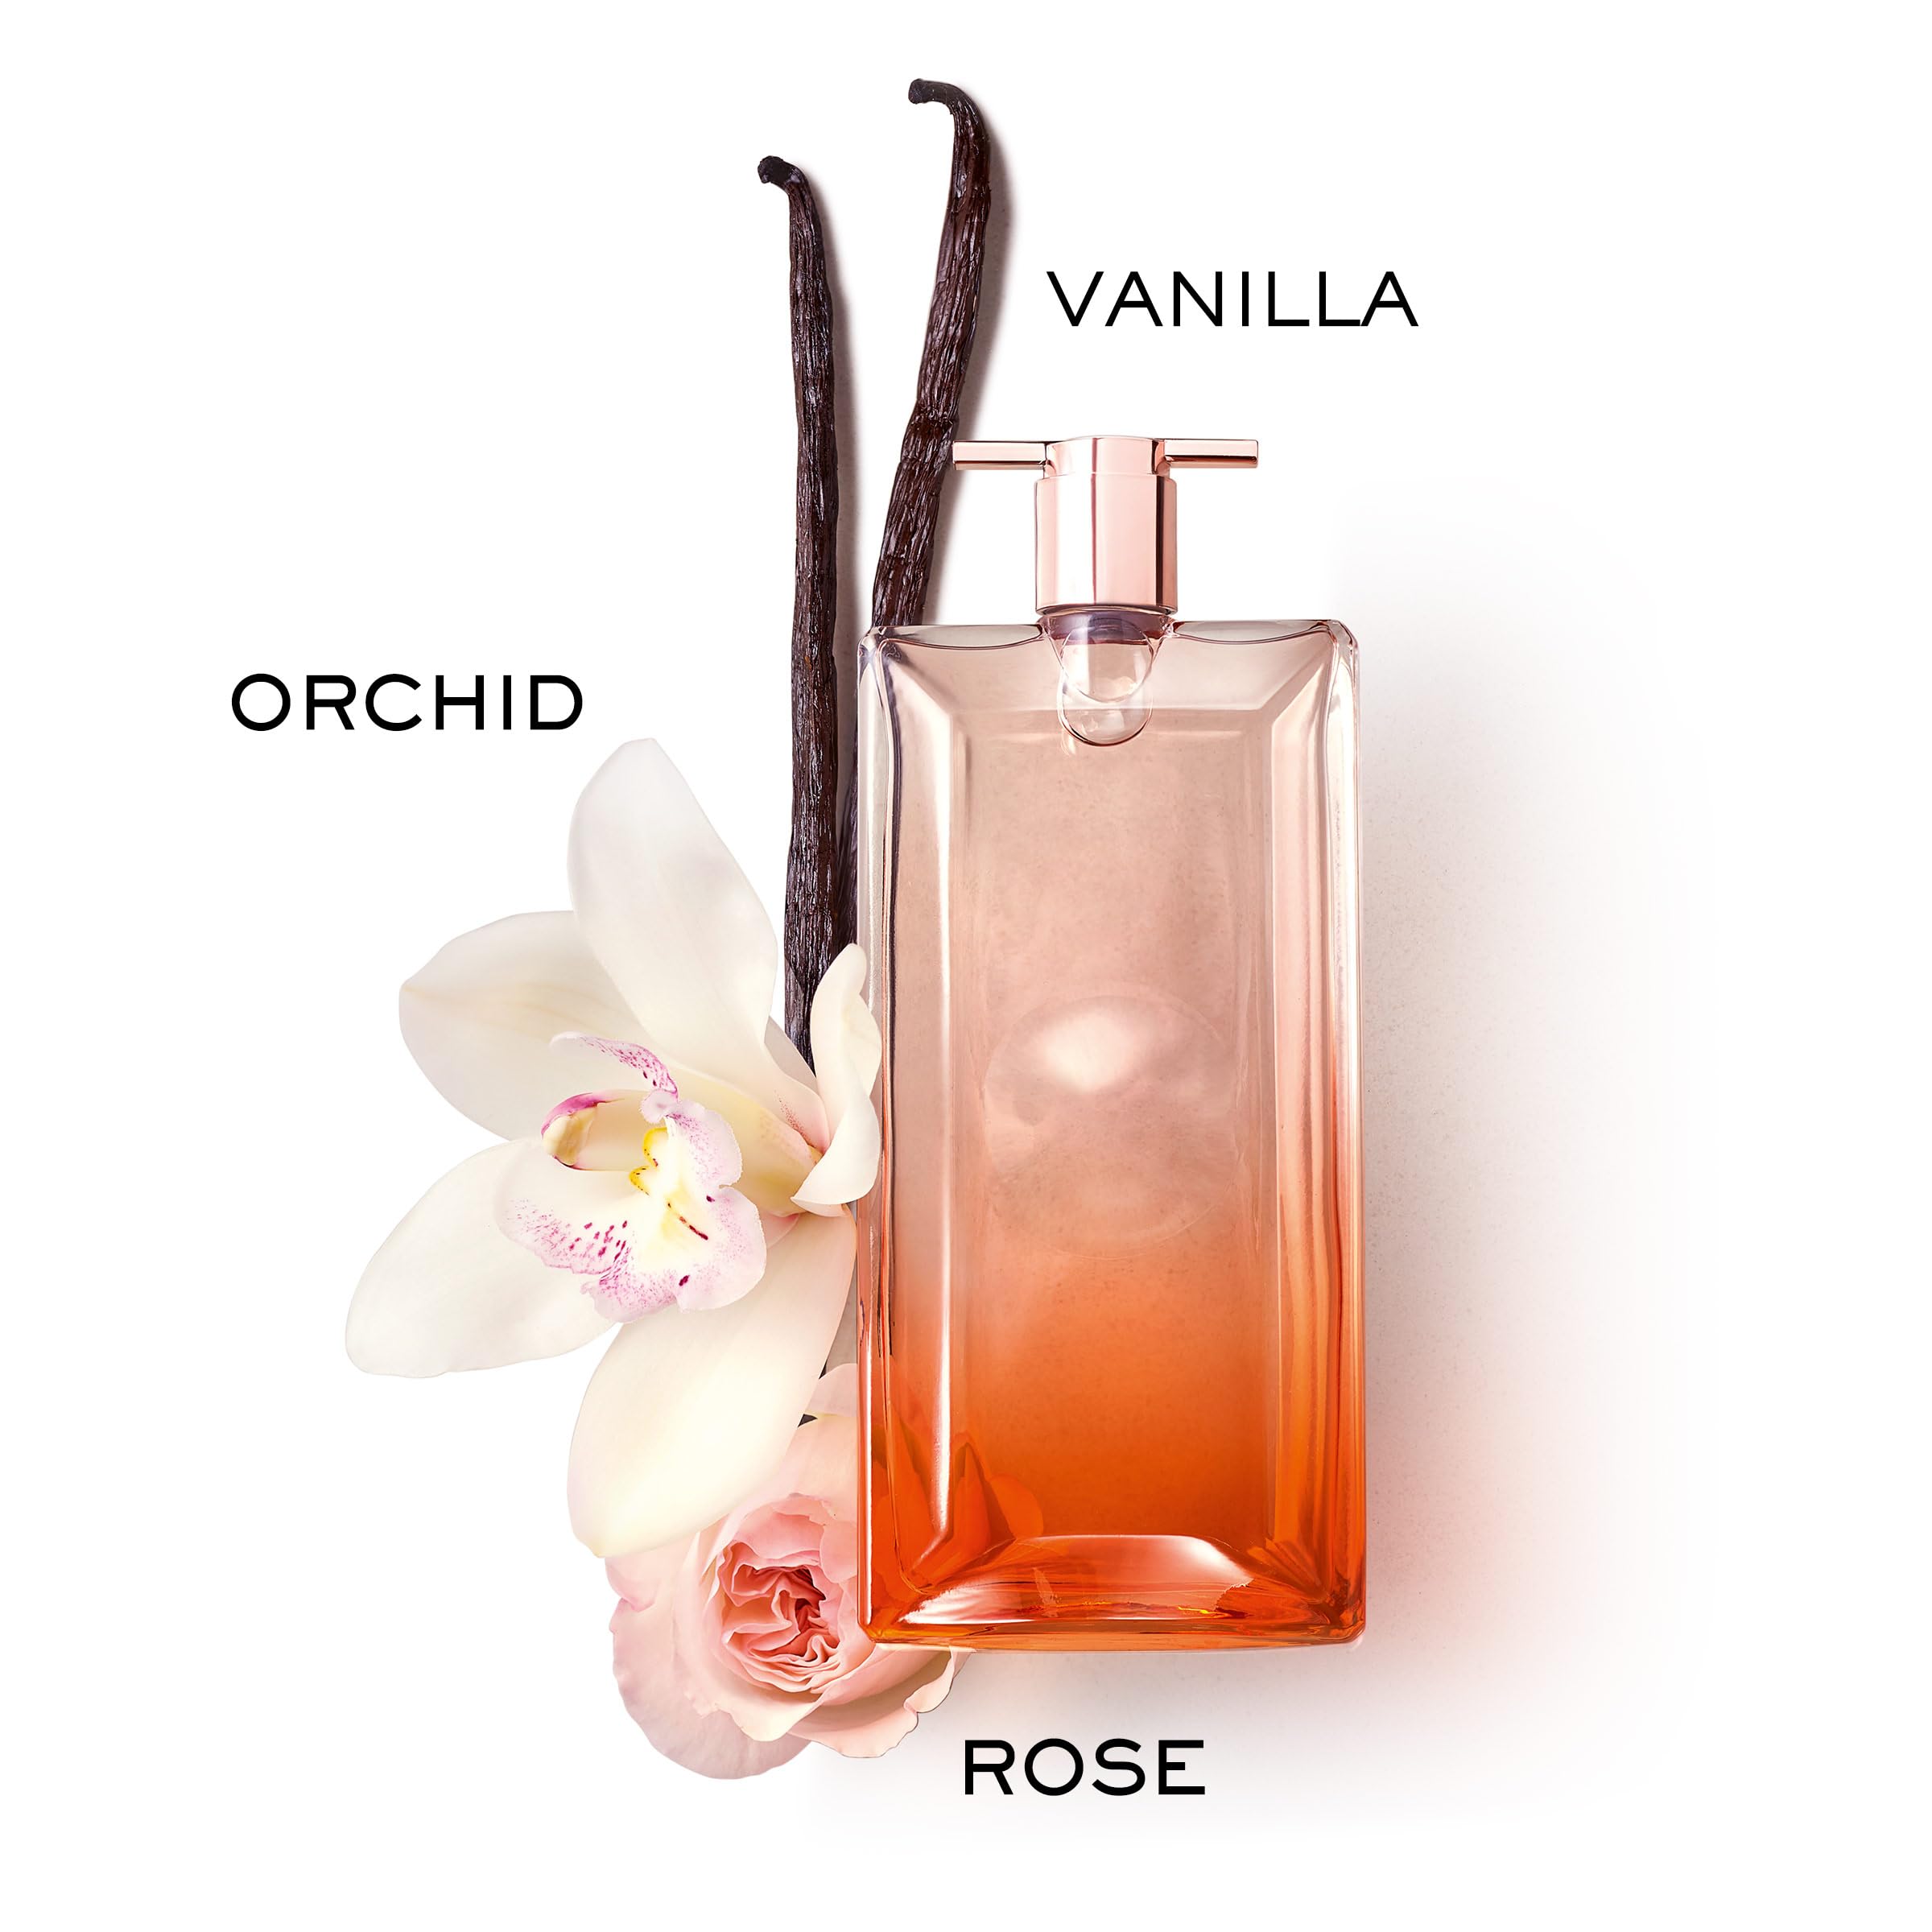 Lancôme Idôle Now Eau de Parfum - Long Lasting Fragrance with Notes of Rose, Musky Orchid Accord & Vanilla - Luminous & Floral Women's Perfume